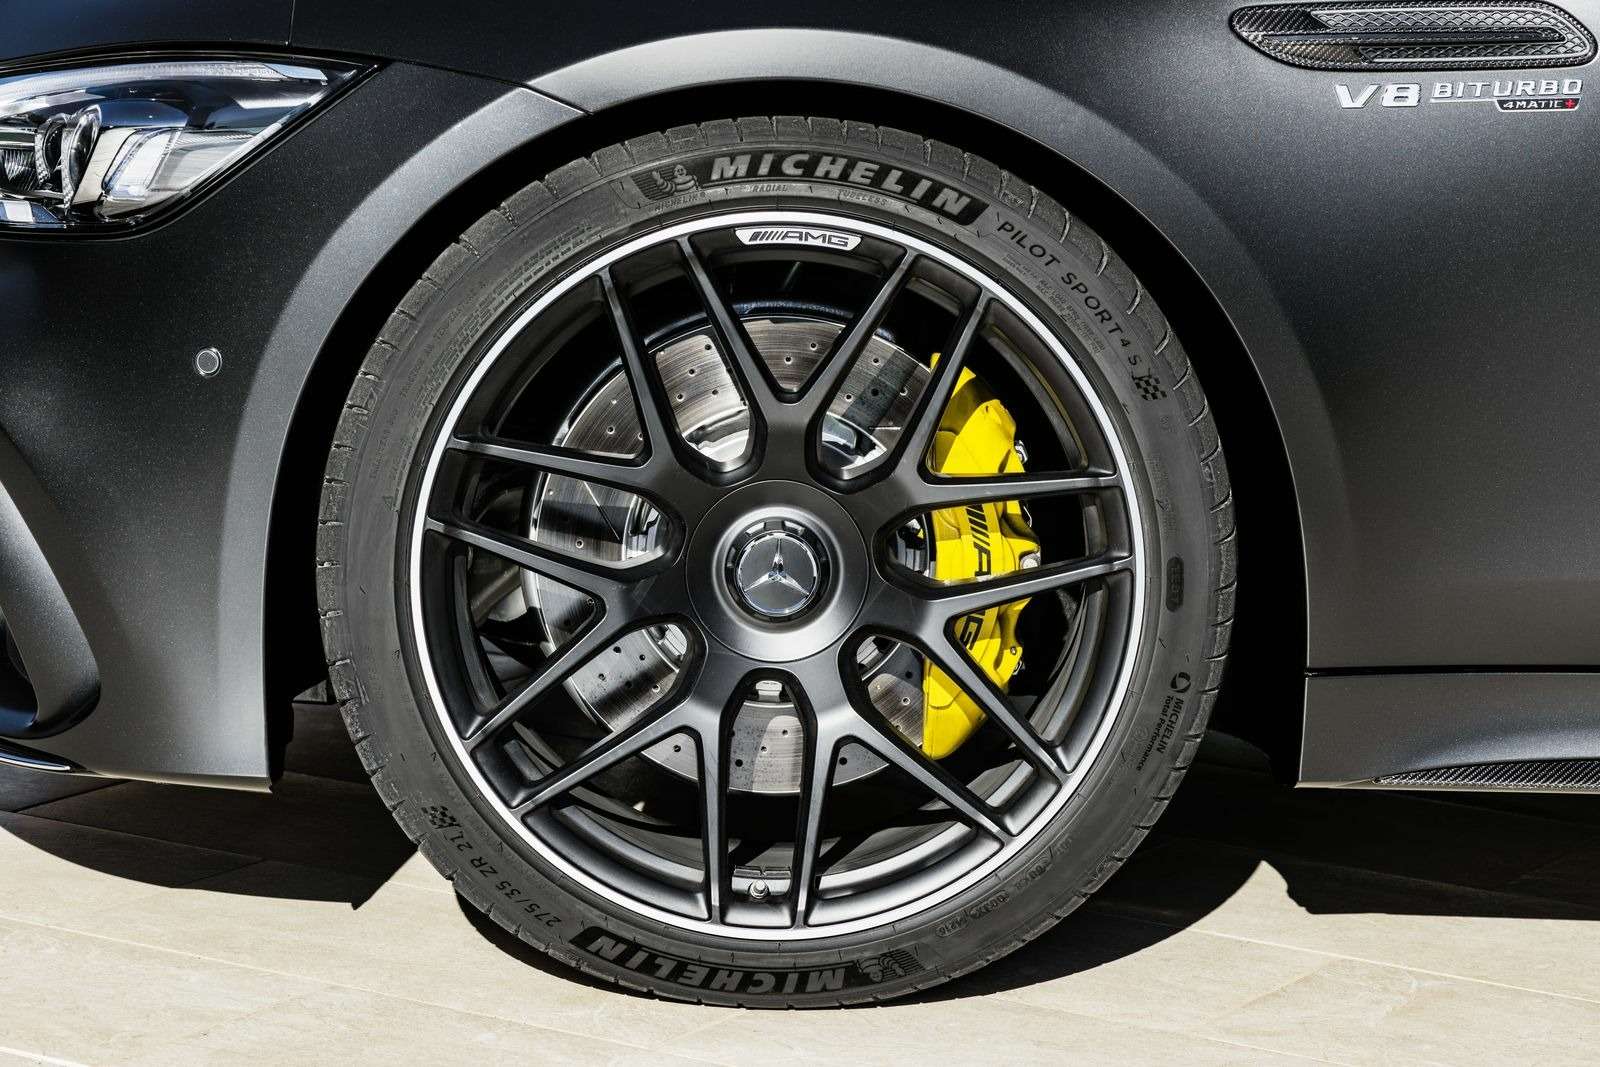 Подмена! Пятидверный Mercedes-AMG GT получил «тележку» Е-класса — фото 851534